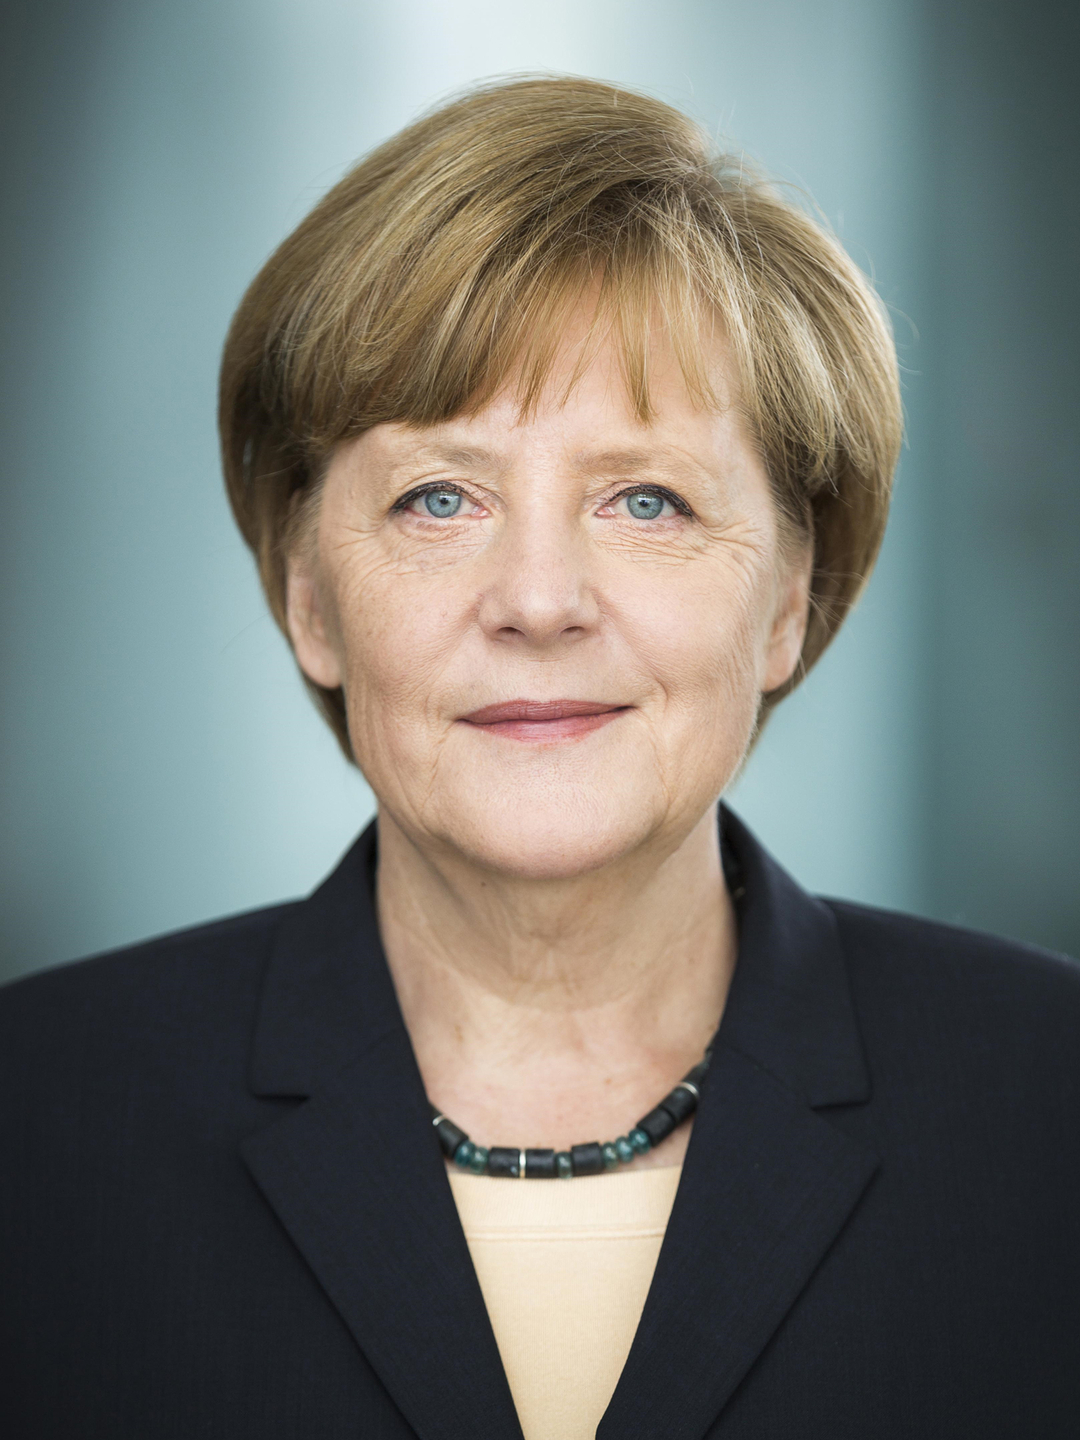 Angela Merkel personal traits